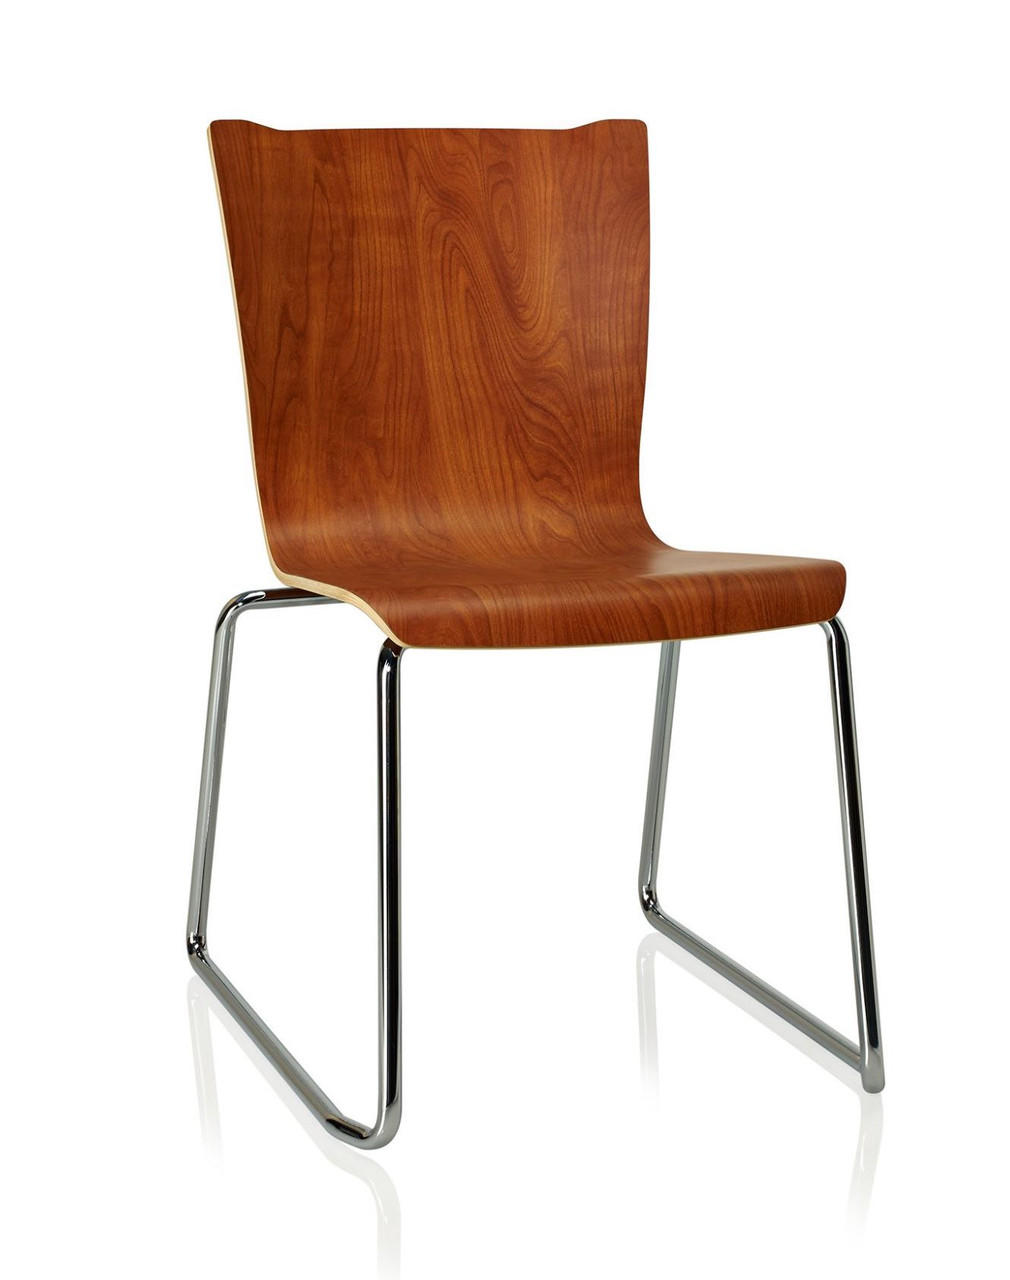 KI Furniture and Seating KI Apply Wood Laminate Sled Base Stack Chair 